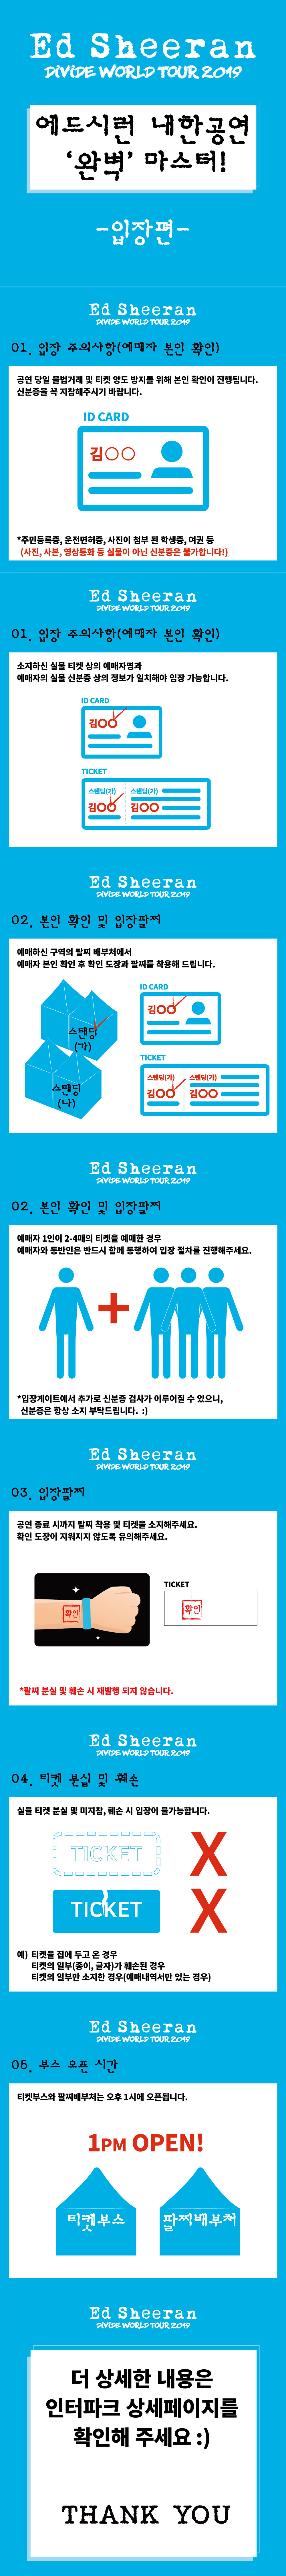 [Ed Sheeran] 신분증 확인 절차 및 입장방법